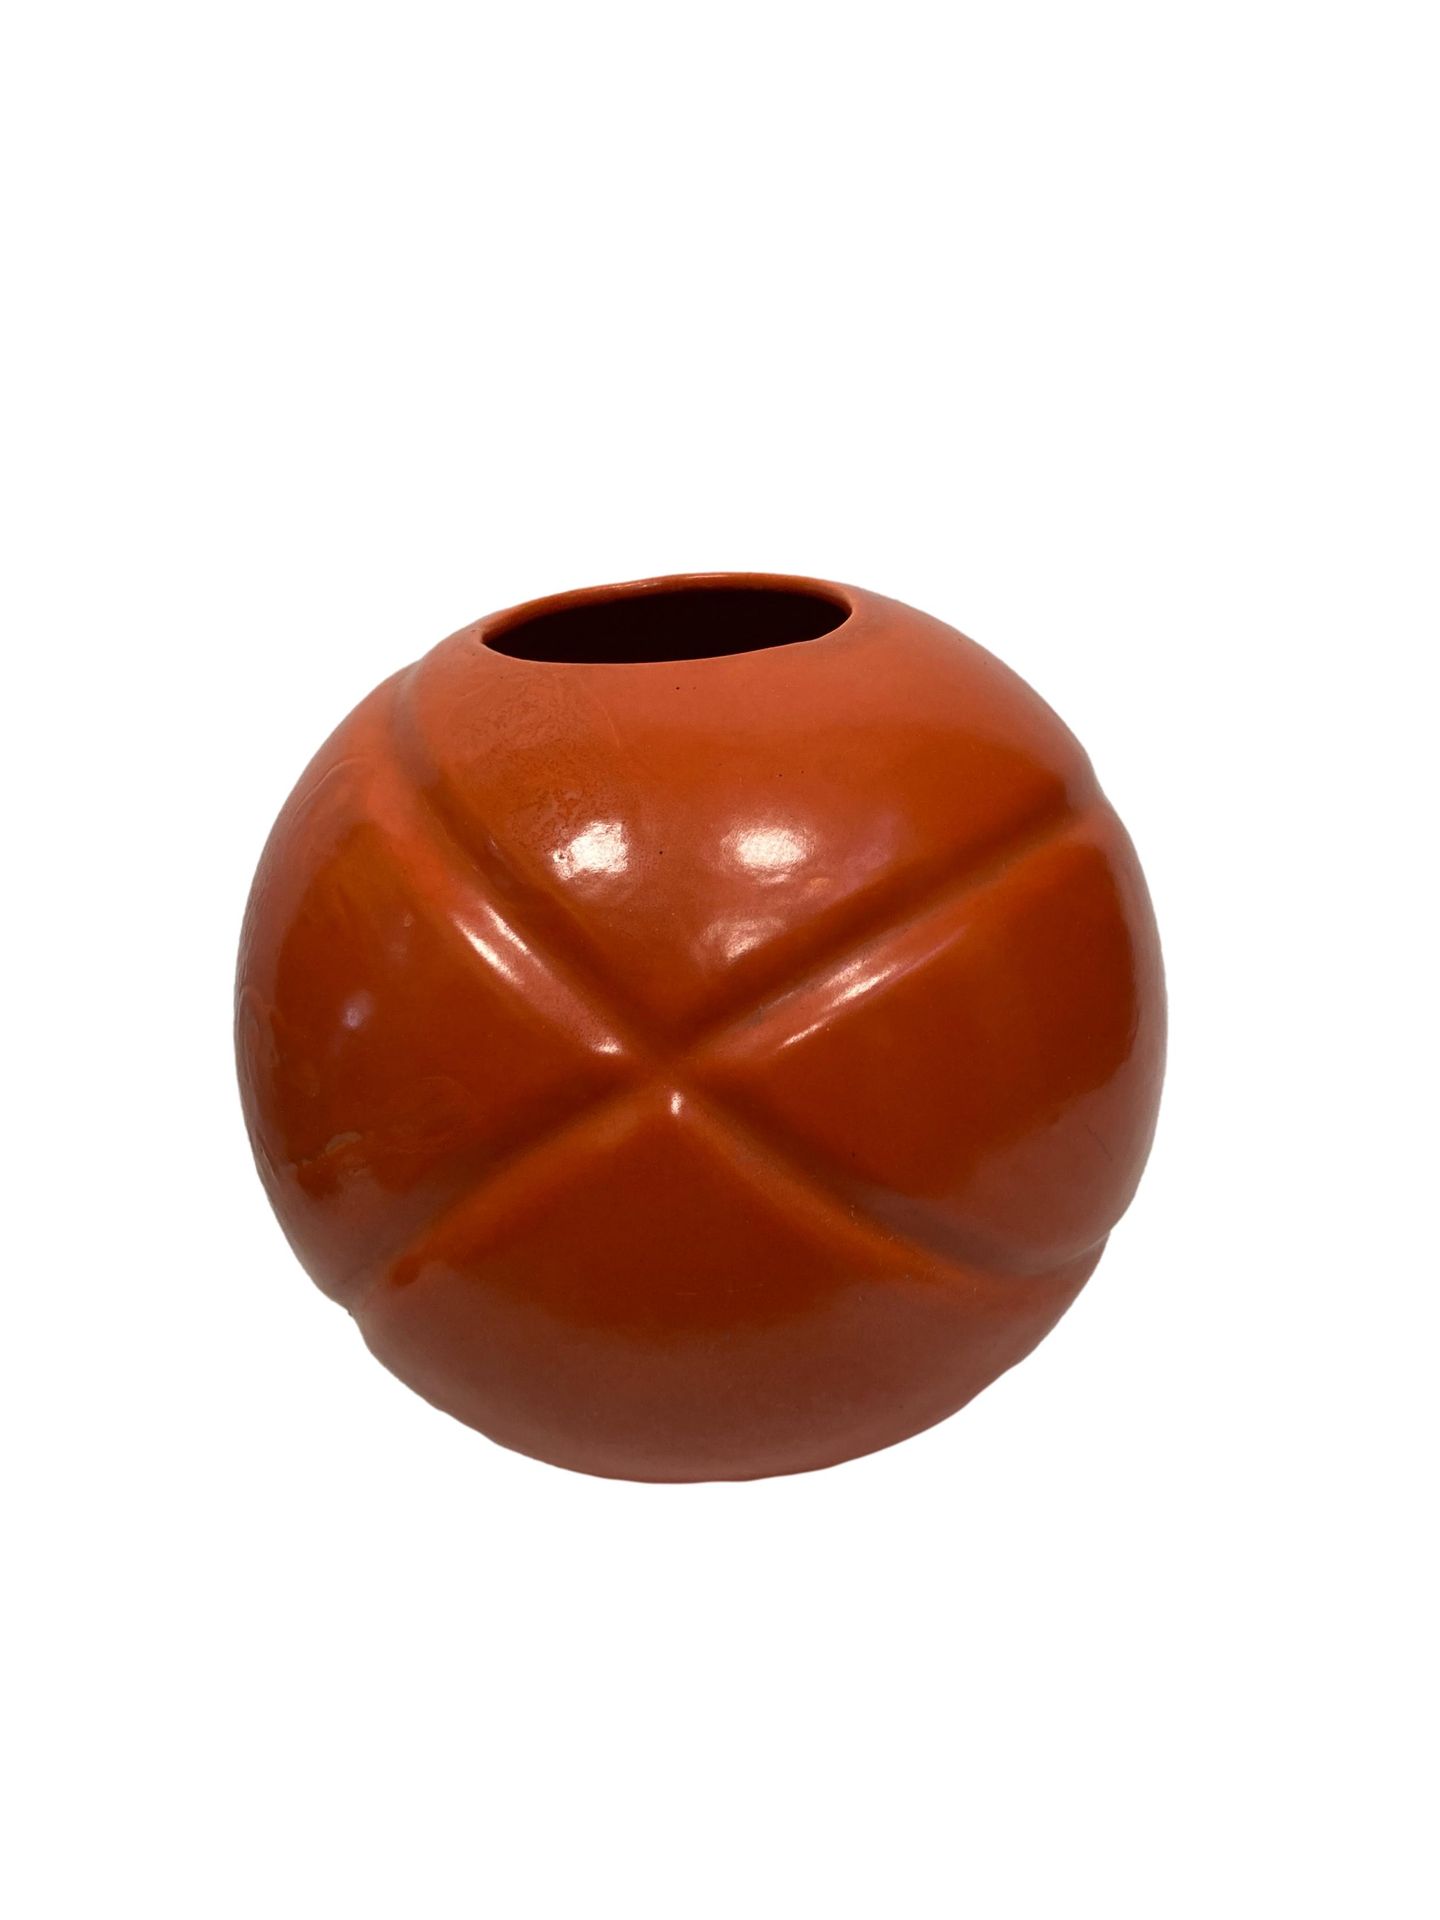 Null STANLEY

Ball vase in polychrome enamelled ceramic coral

H. 23 cm